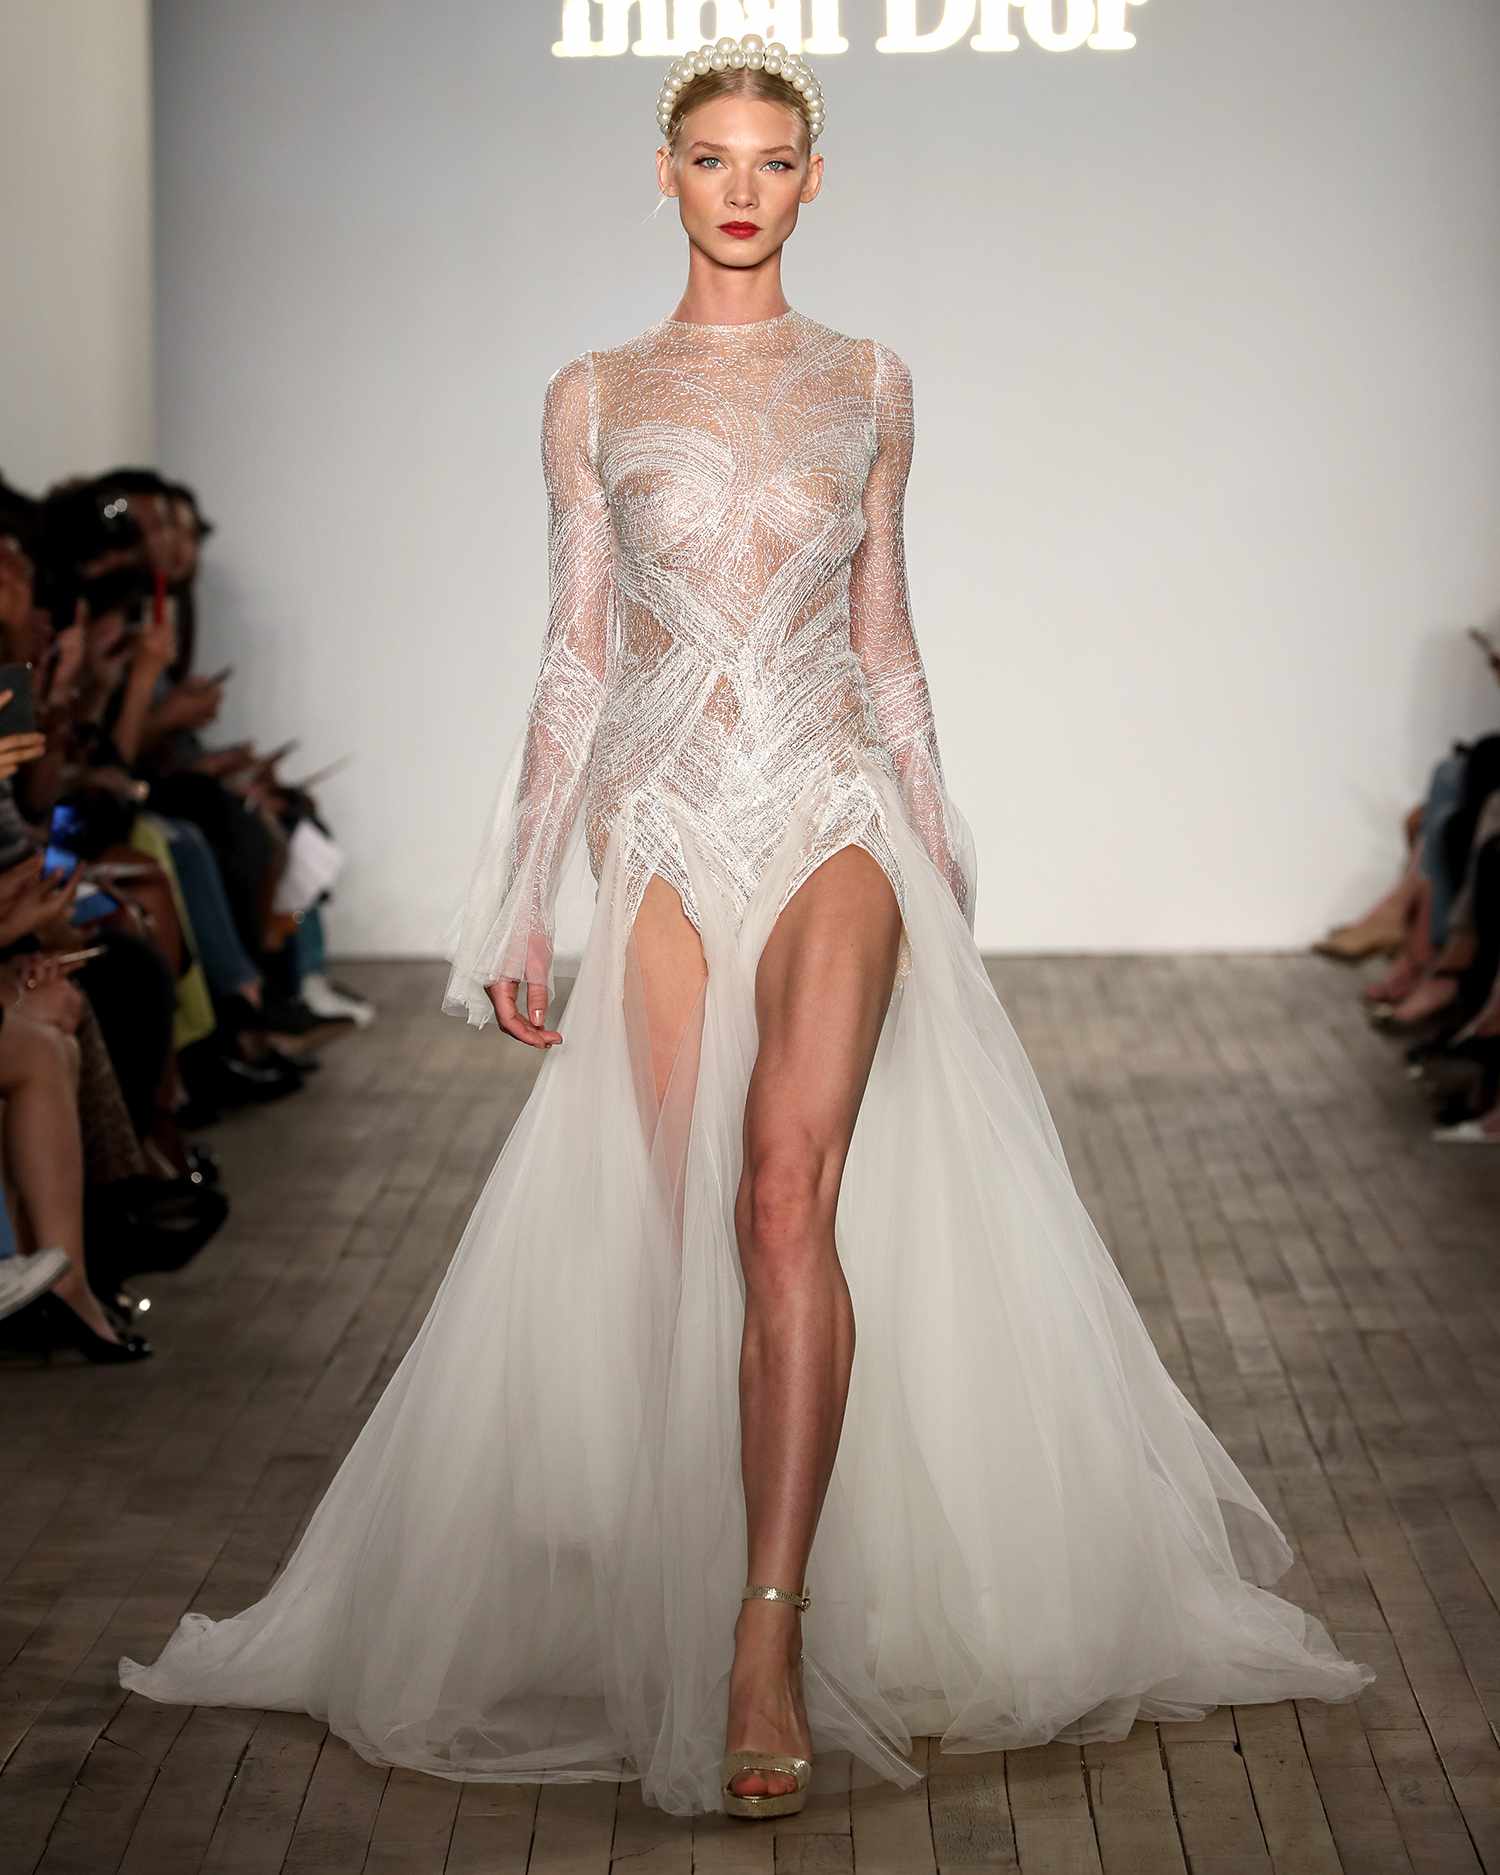 inbal dror wedding dress high-neck with tulle skirt overlay